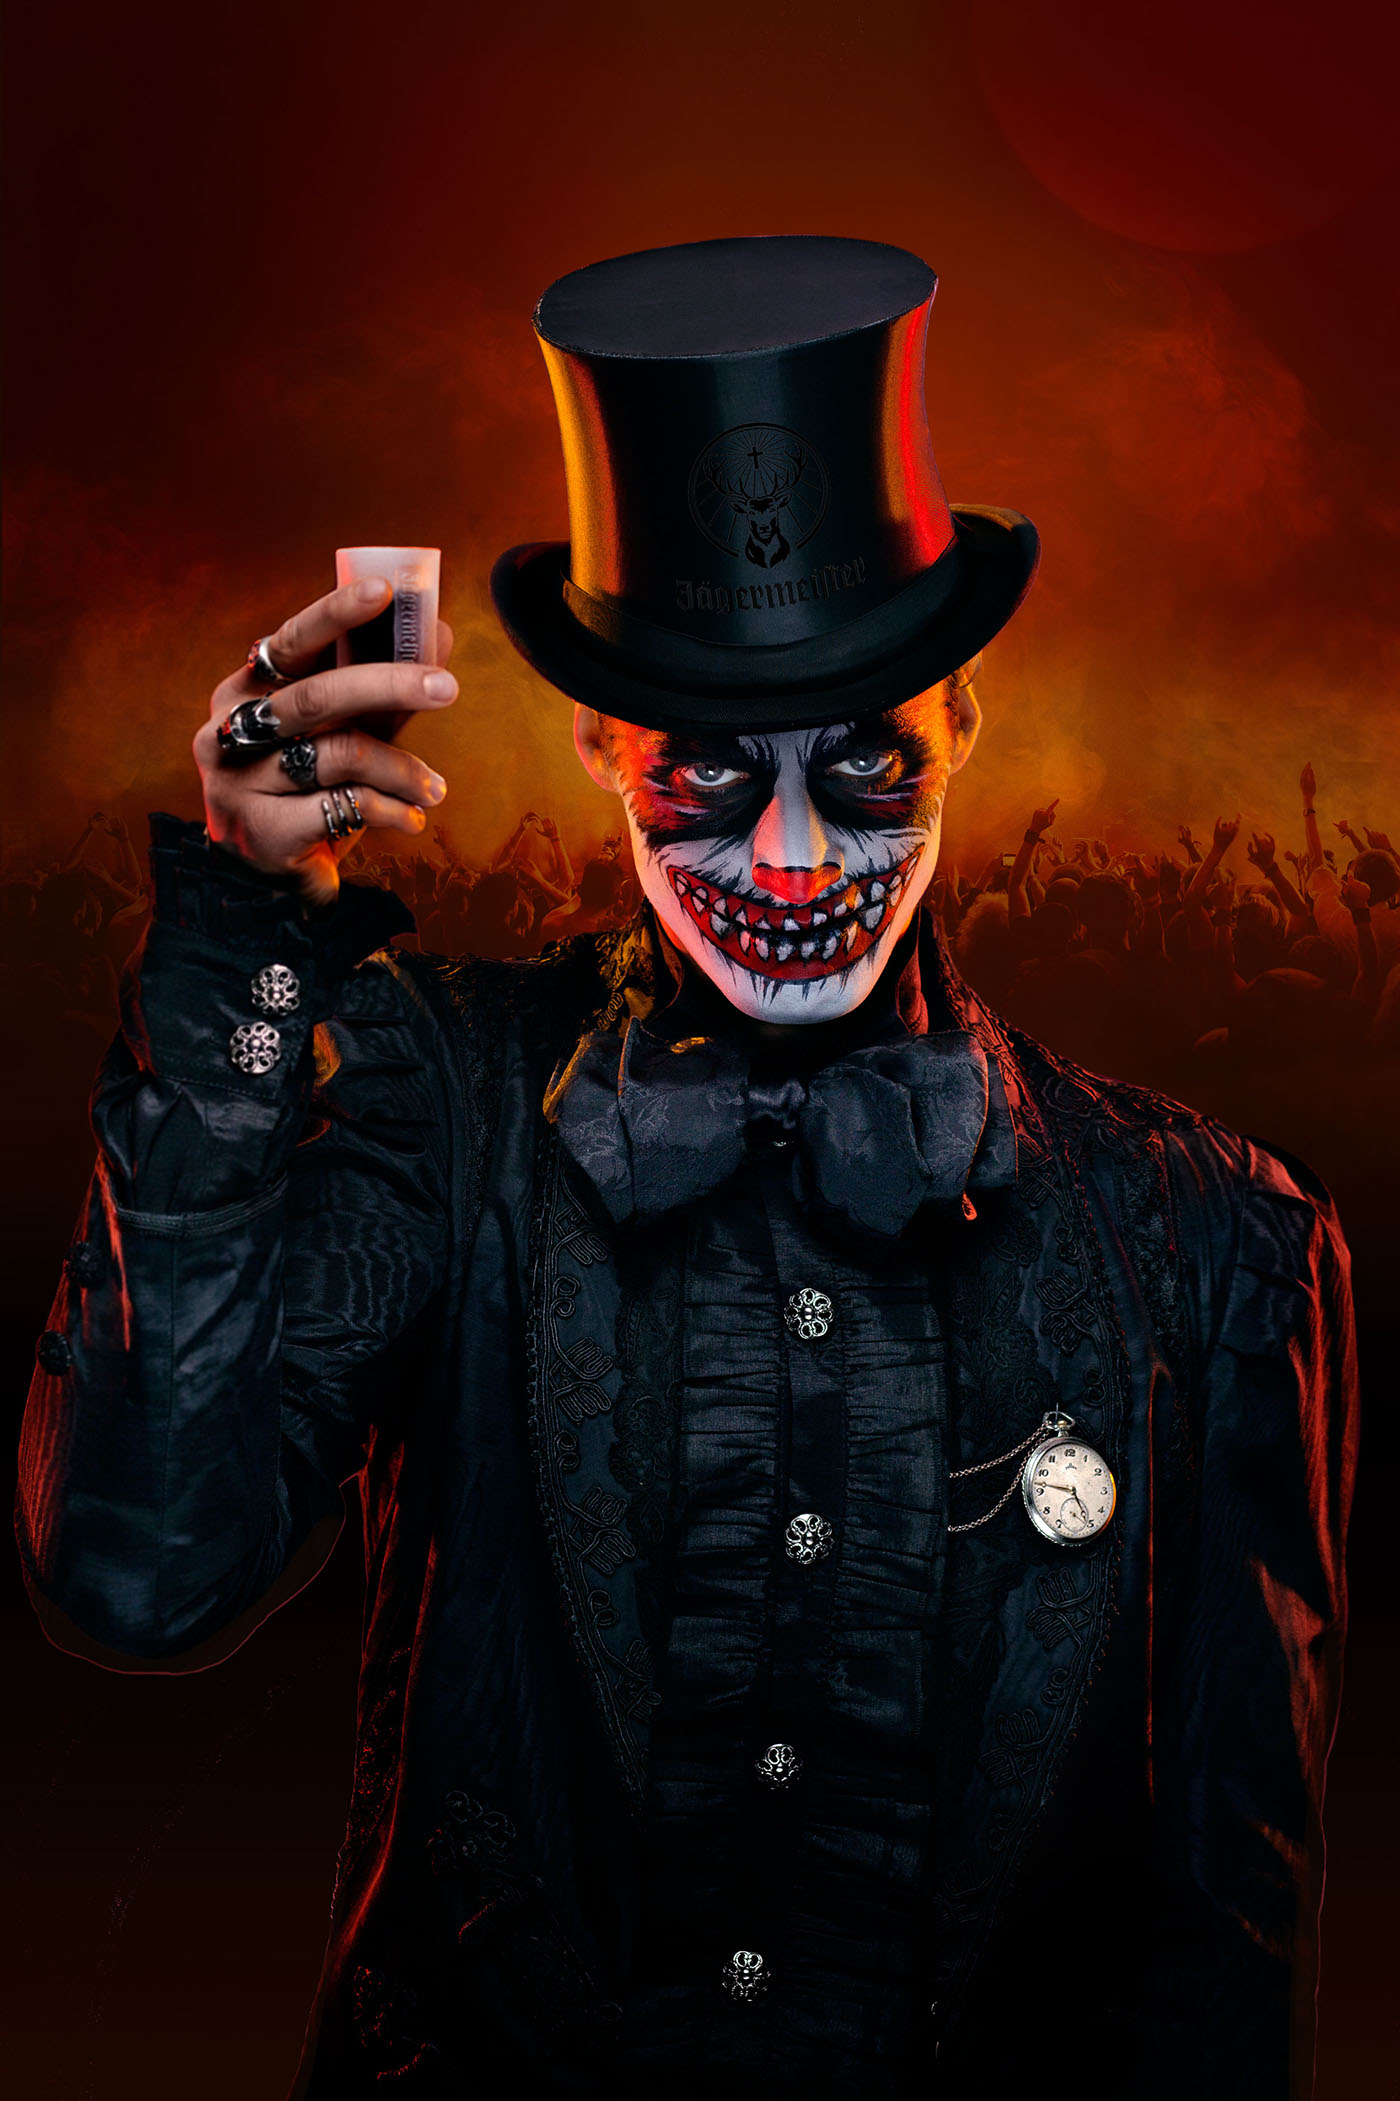 portrait horror Halloween vampire zombie Scary dark evil cheers alcohol